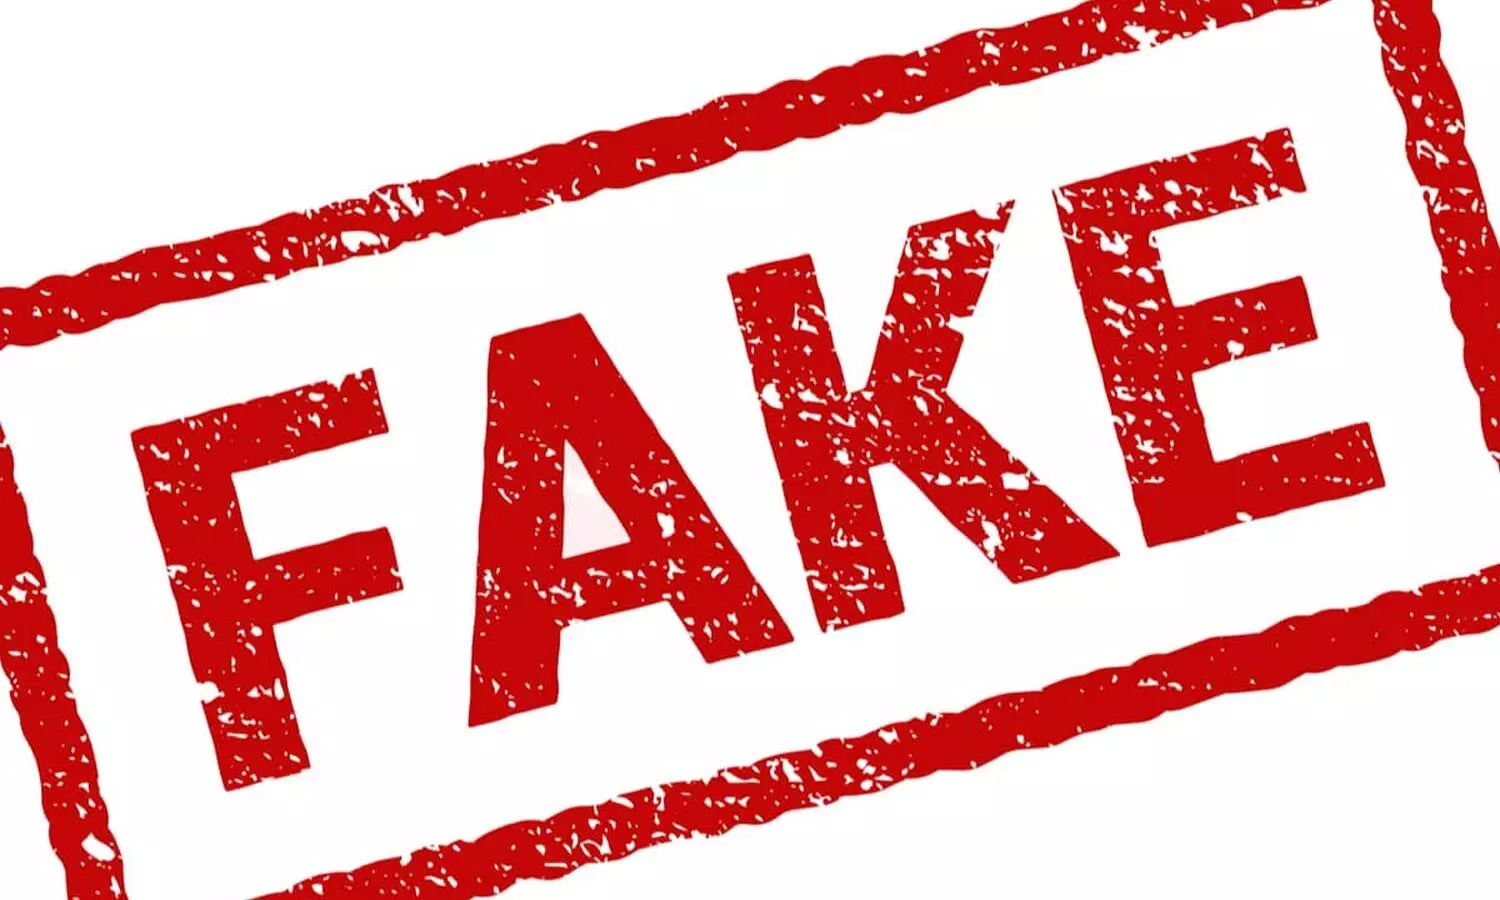 Degree scam: Delhi-based consultant found supplying fake MBBS certificate, 100 doctors under scanner in Hyderabad